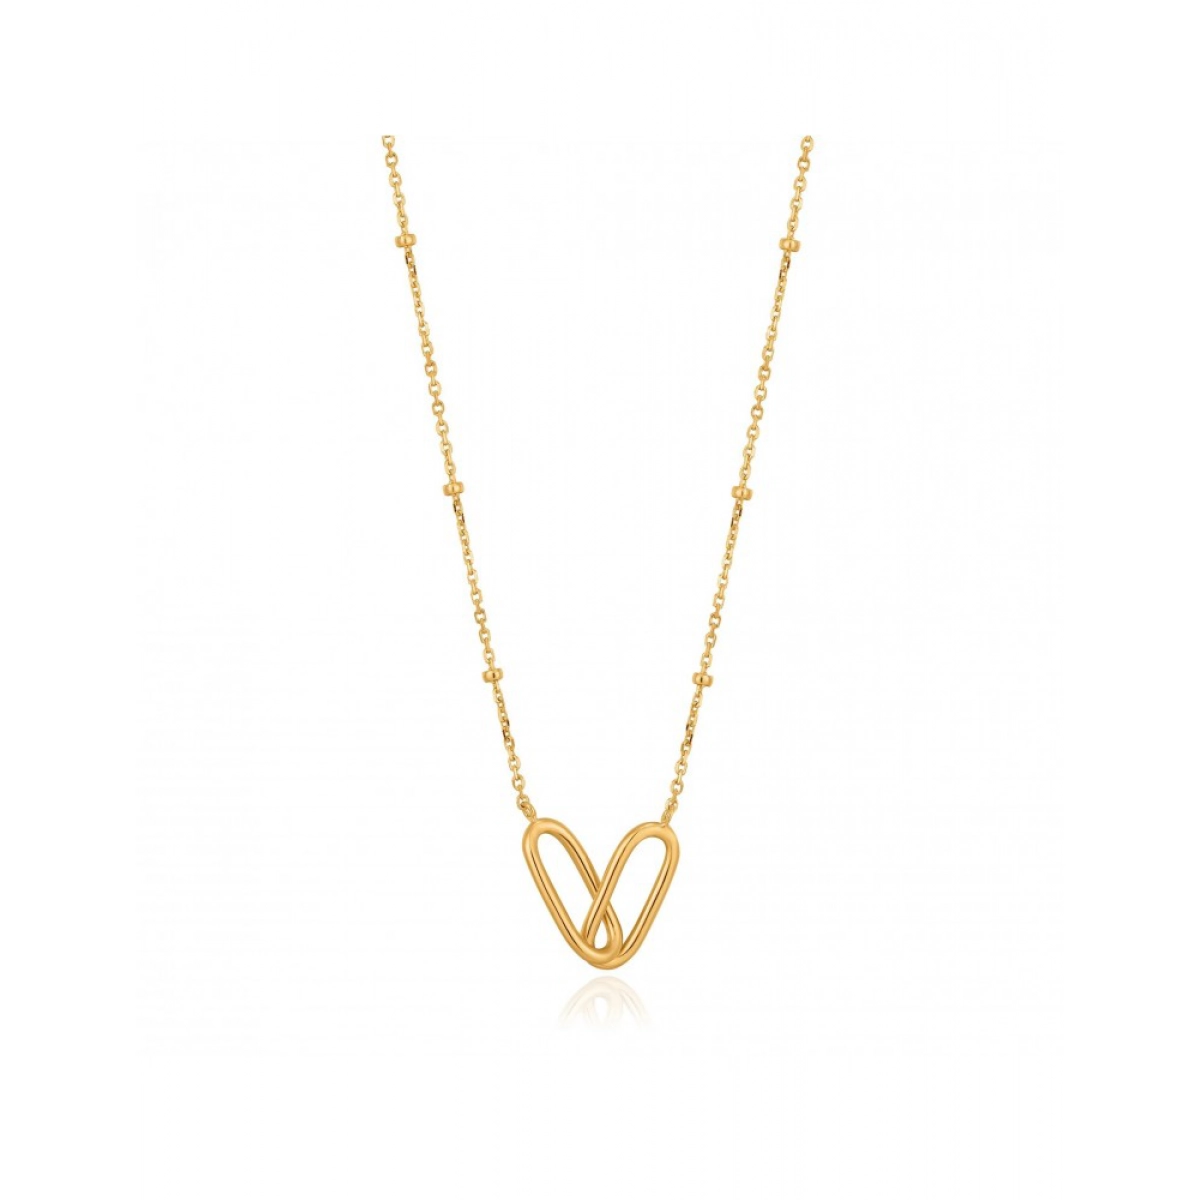 Collar Ania Haie Gold Beaded Chain N021-01G Plata de Ley 16170044